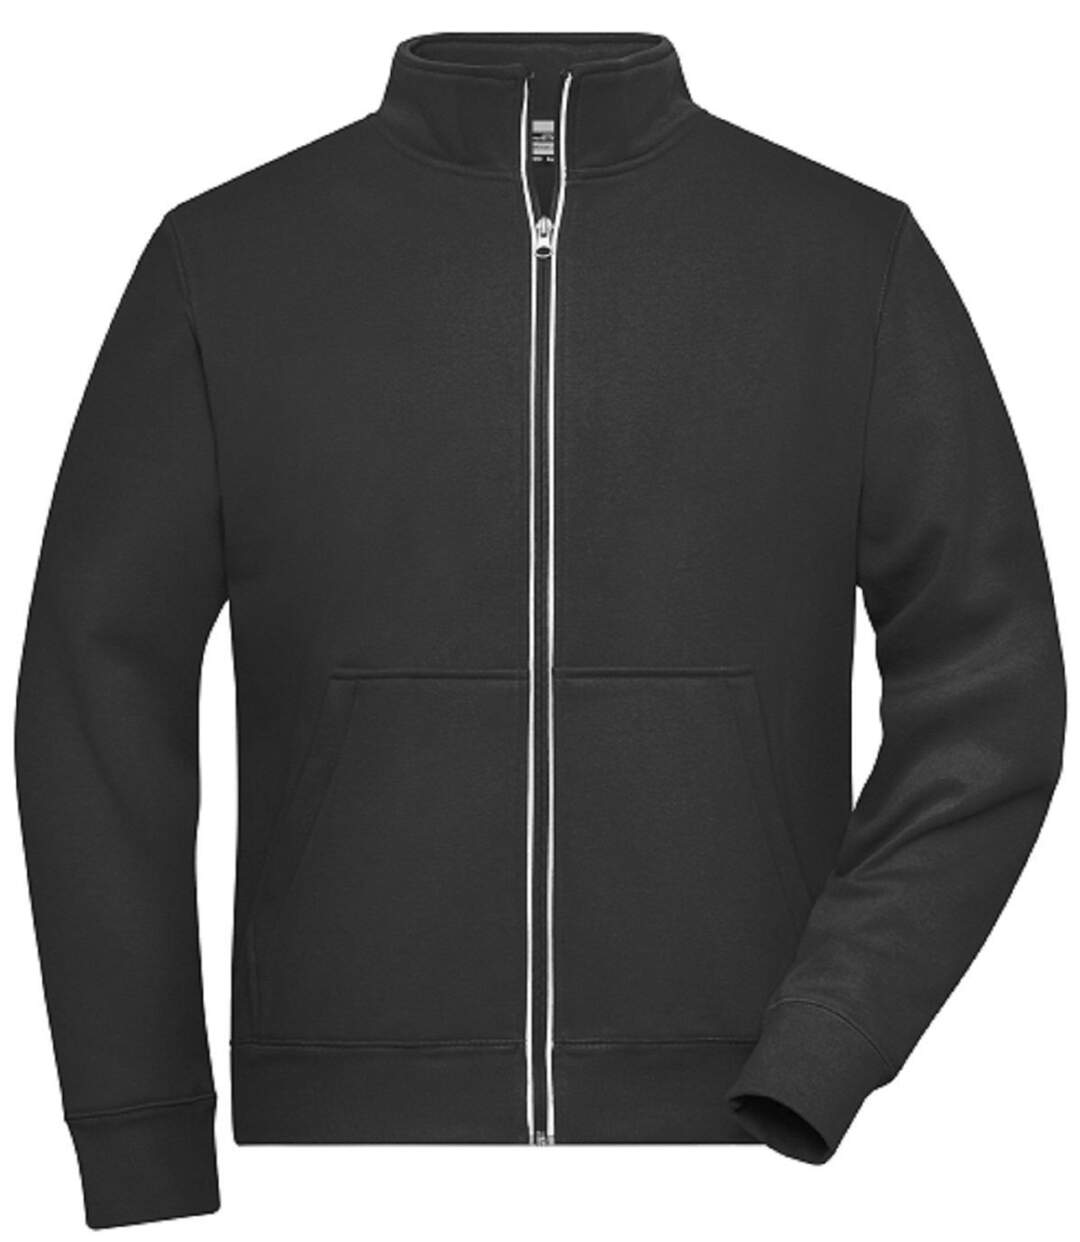 Veste sweat zippée workwear - Homme - JN1810 - noir